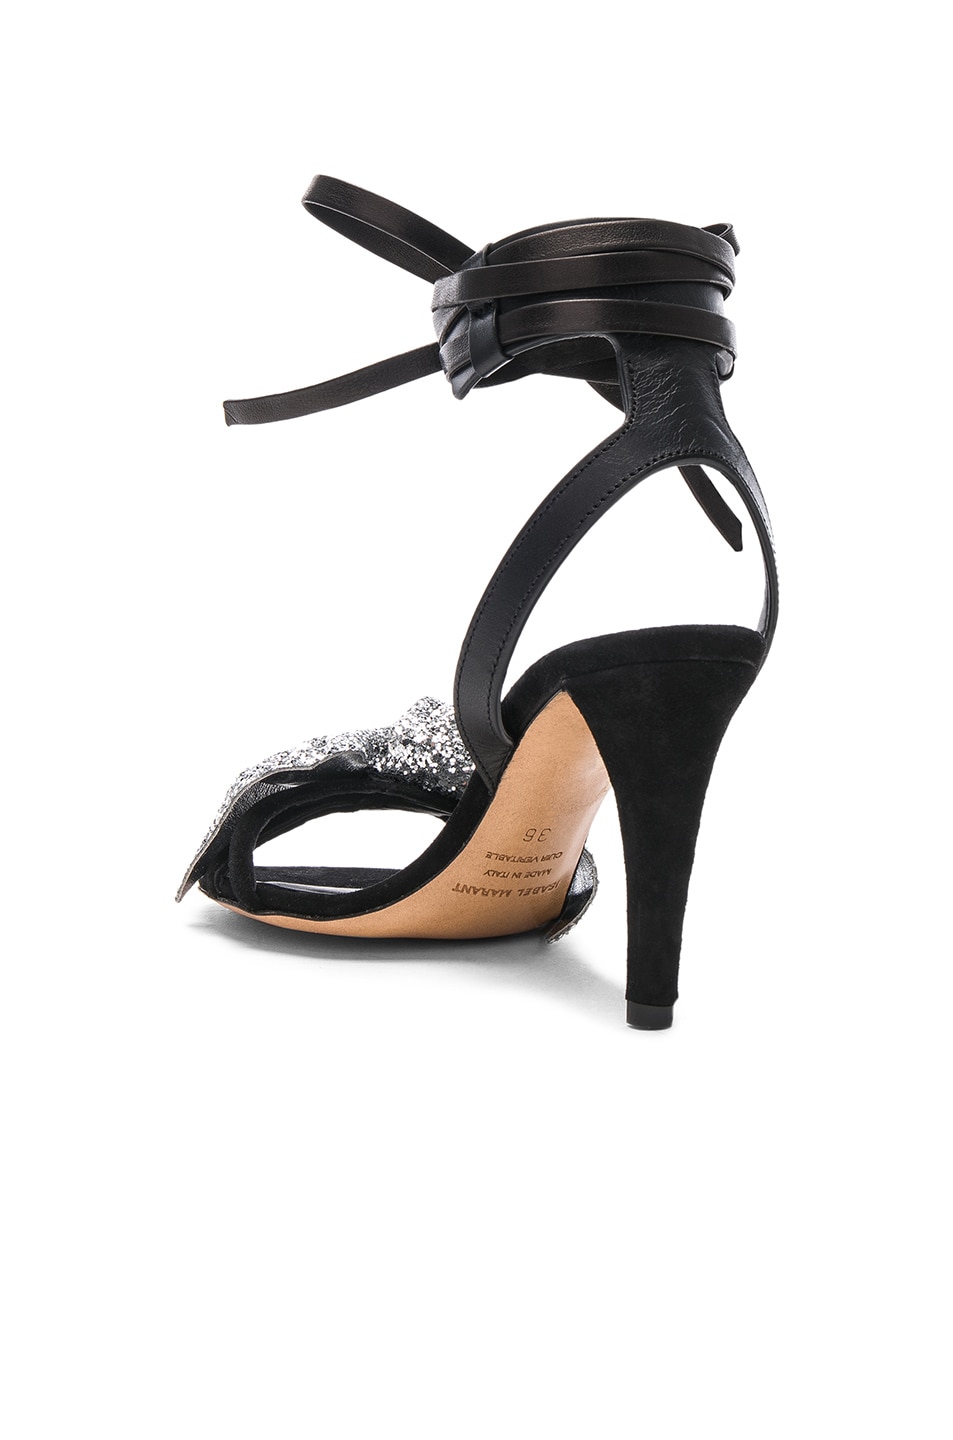 Isabel Marant Glitter Akynn Ankle Strap Sandals in Silver | FWRD